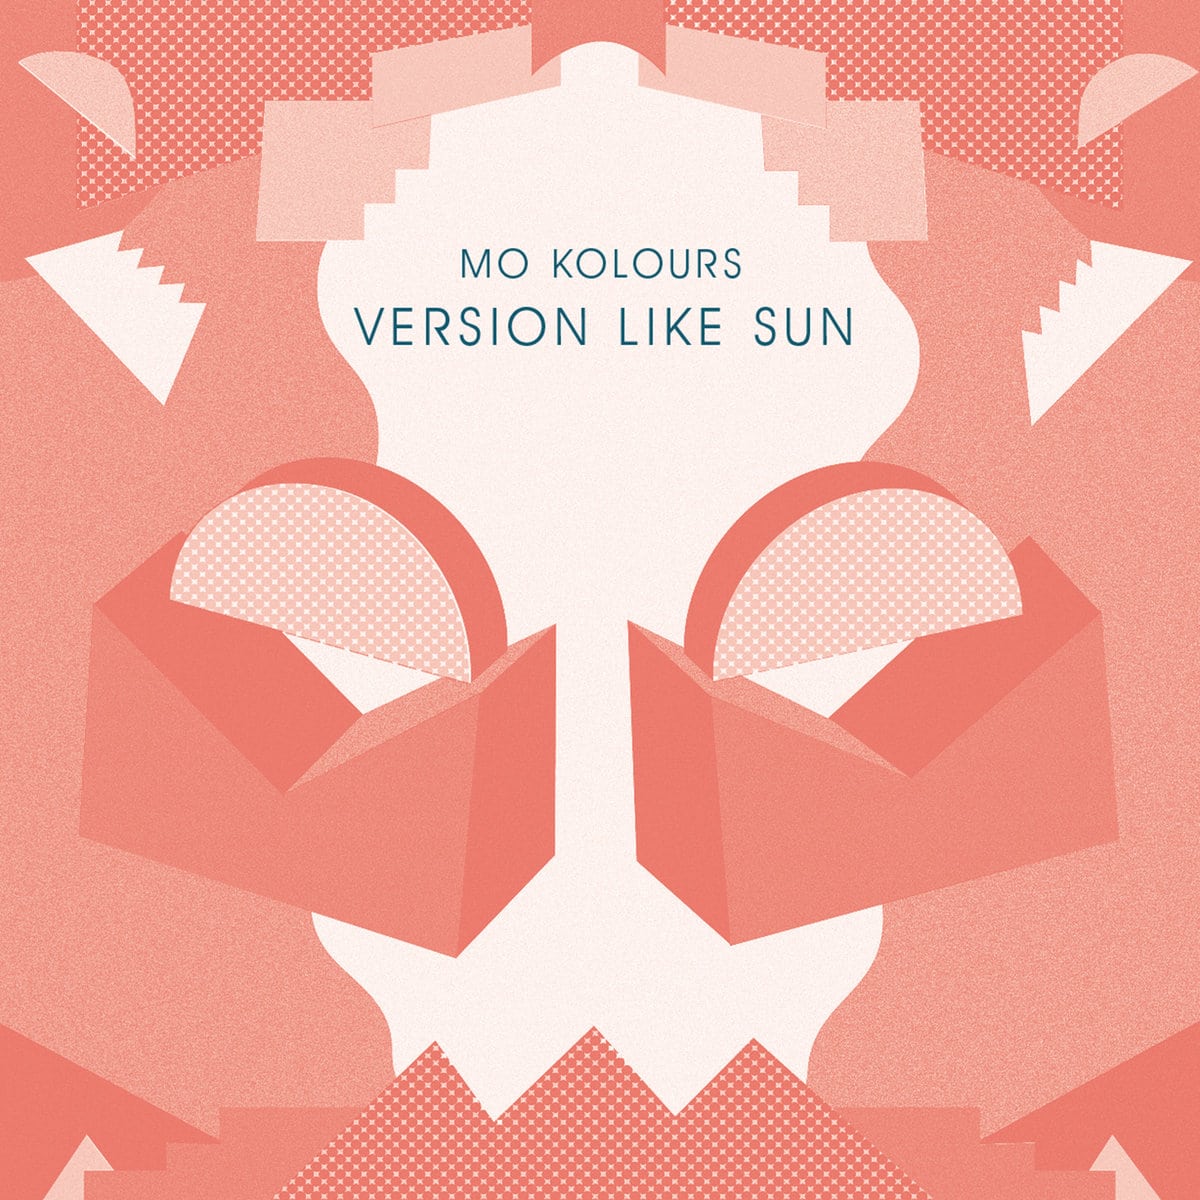 Mo Kolours - "Version Like Sun" (Release)